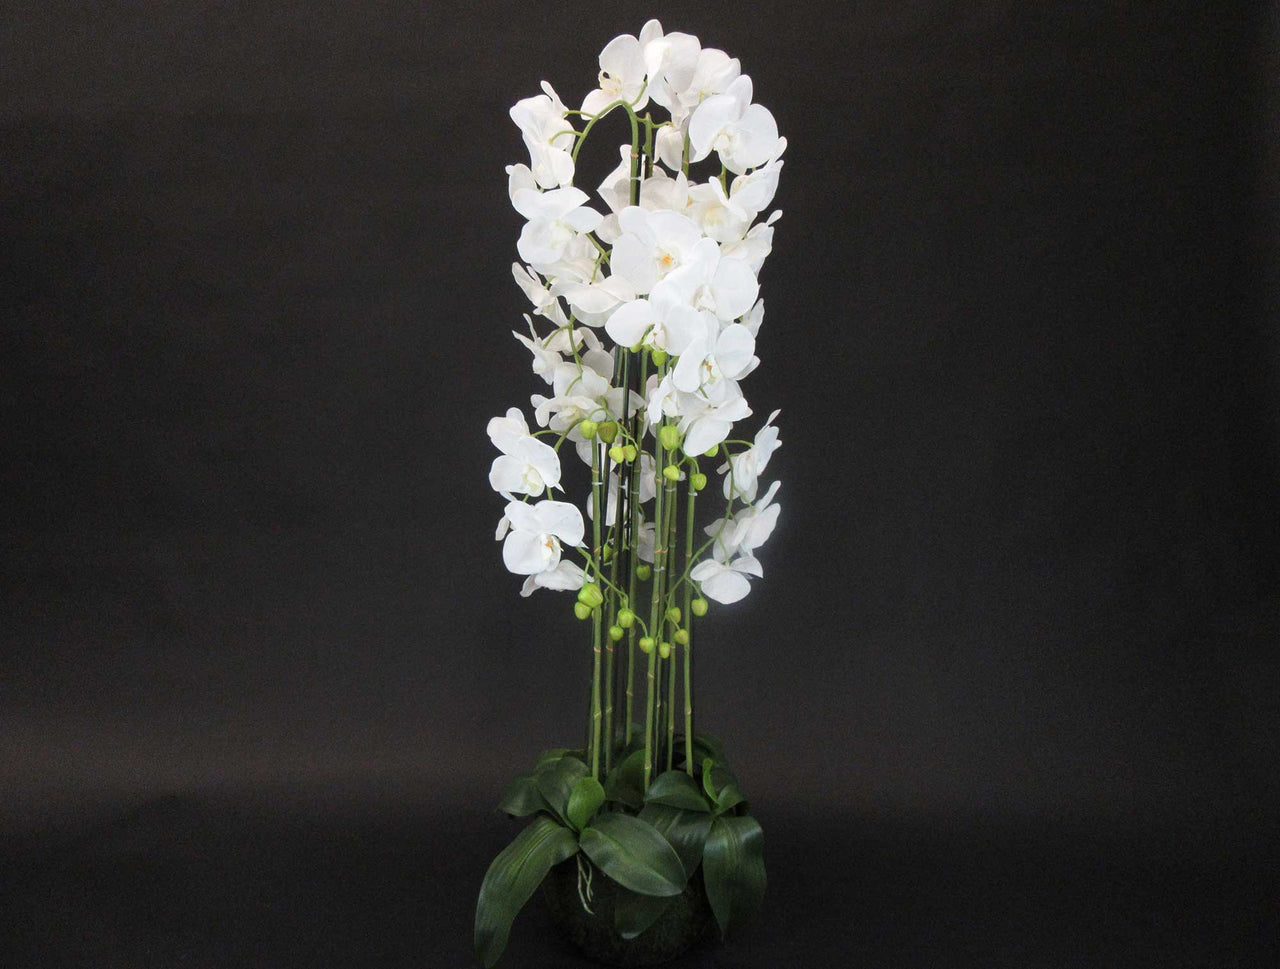 HCFL5928 - White Orchid Plant